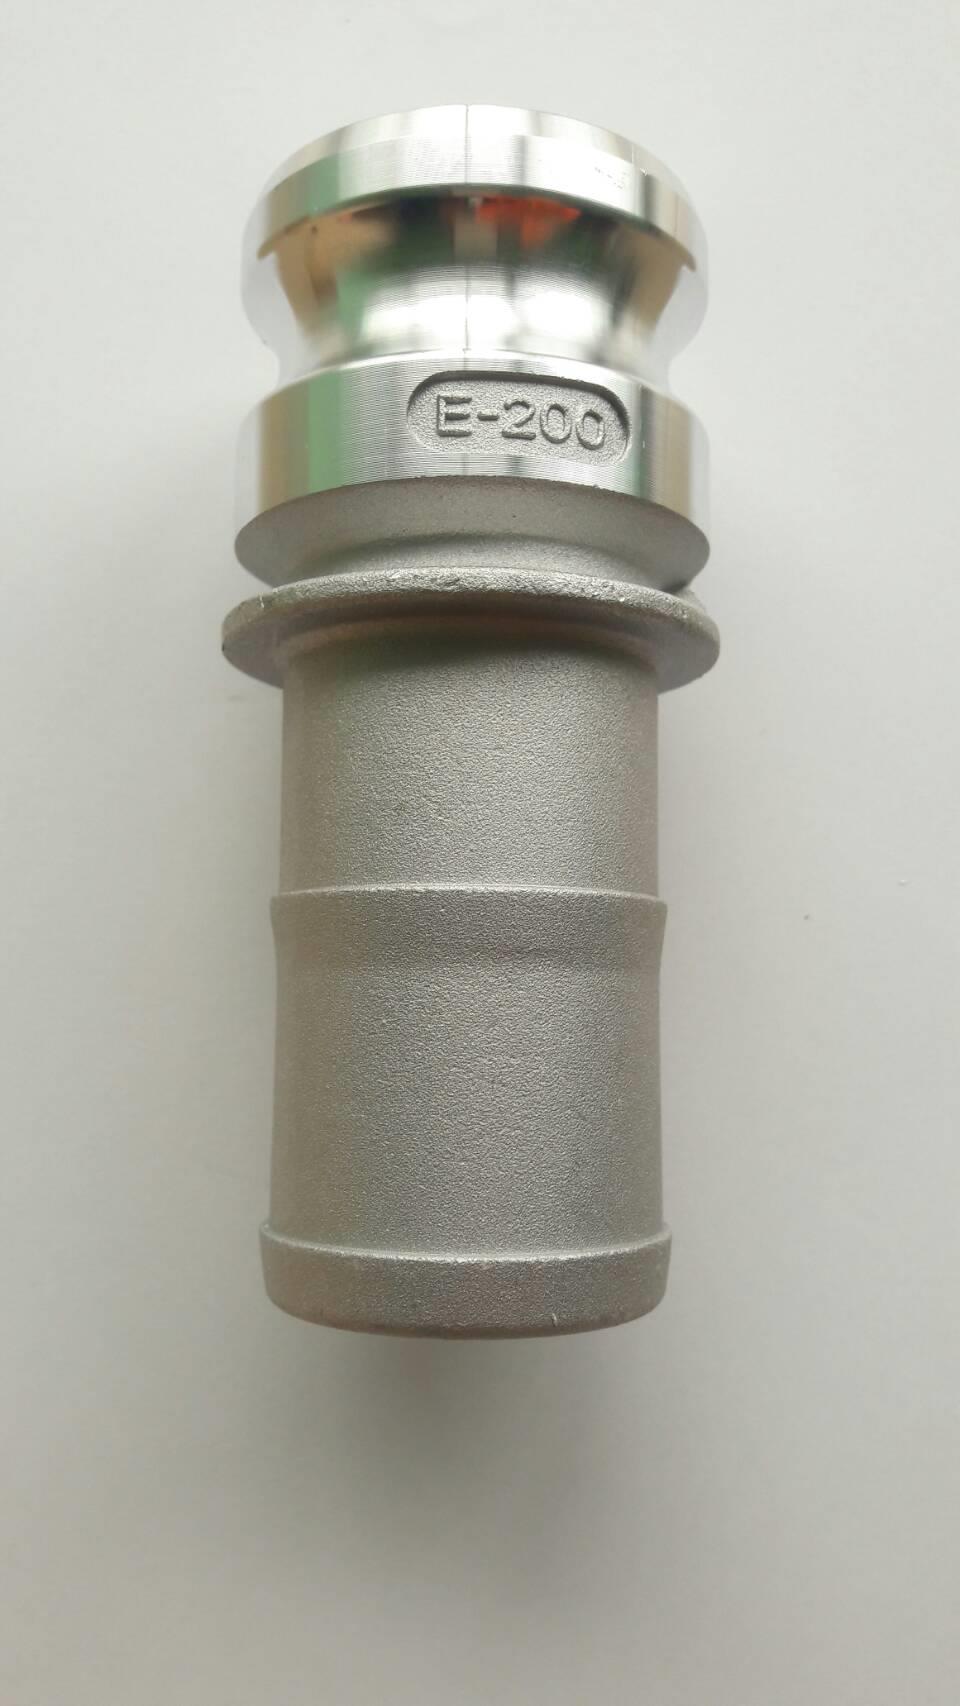 Quick Coupling E200 Aluminuim,Aluminuim,,Pumps, Valves and Accessories/Pipe